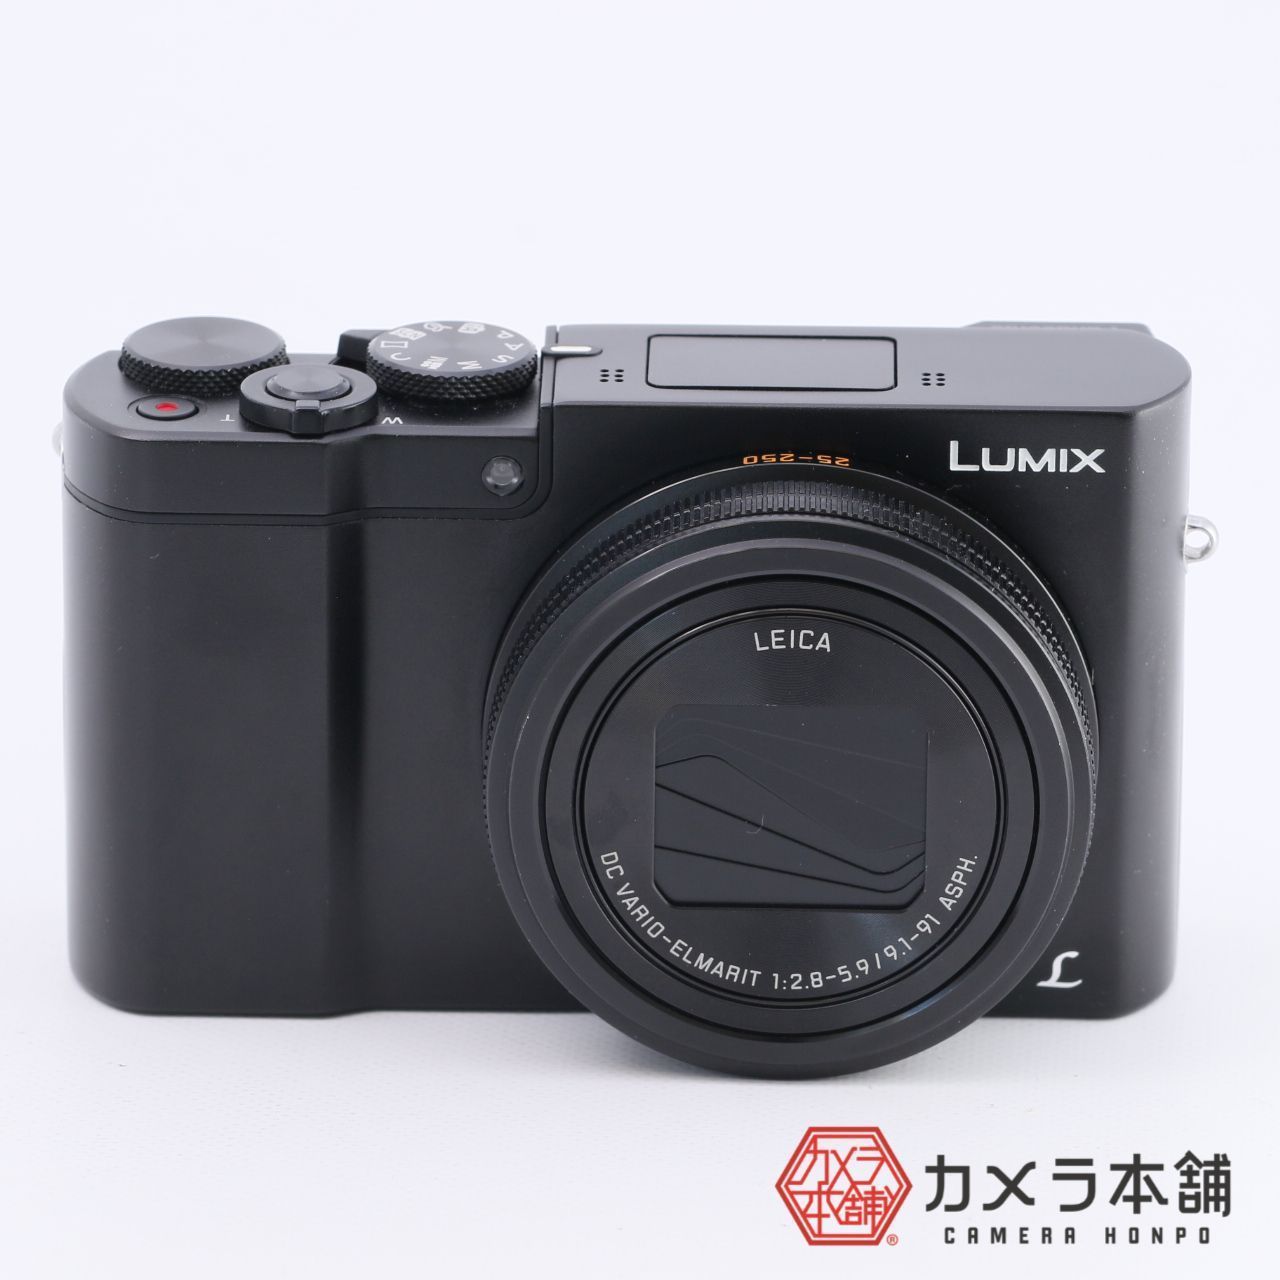 Panasonic LUMIX TX1 光学10倍 ブラック DMC-TX1-K カメラ本舗｜Camera honpo メルカリ